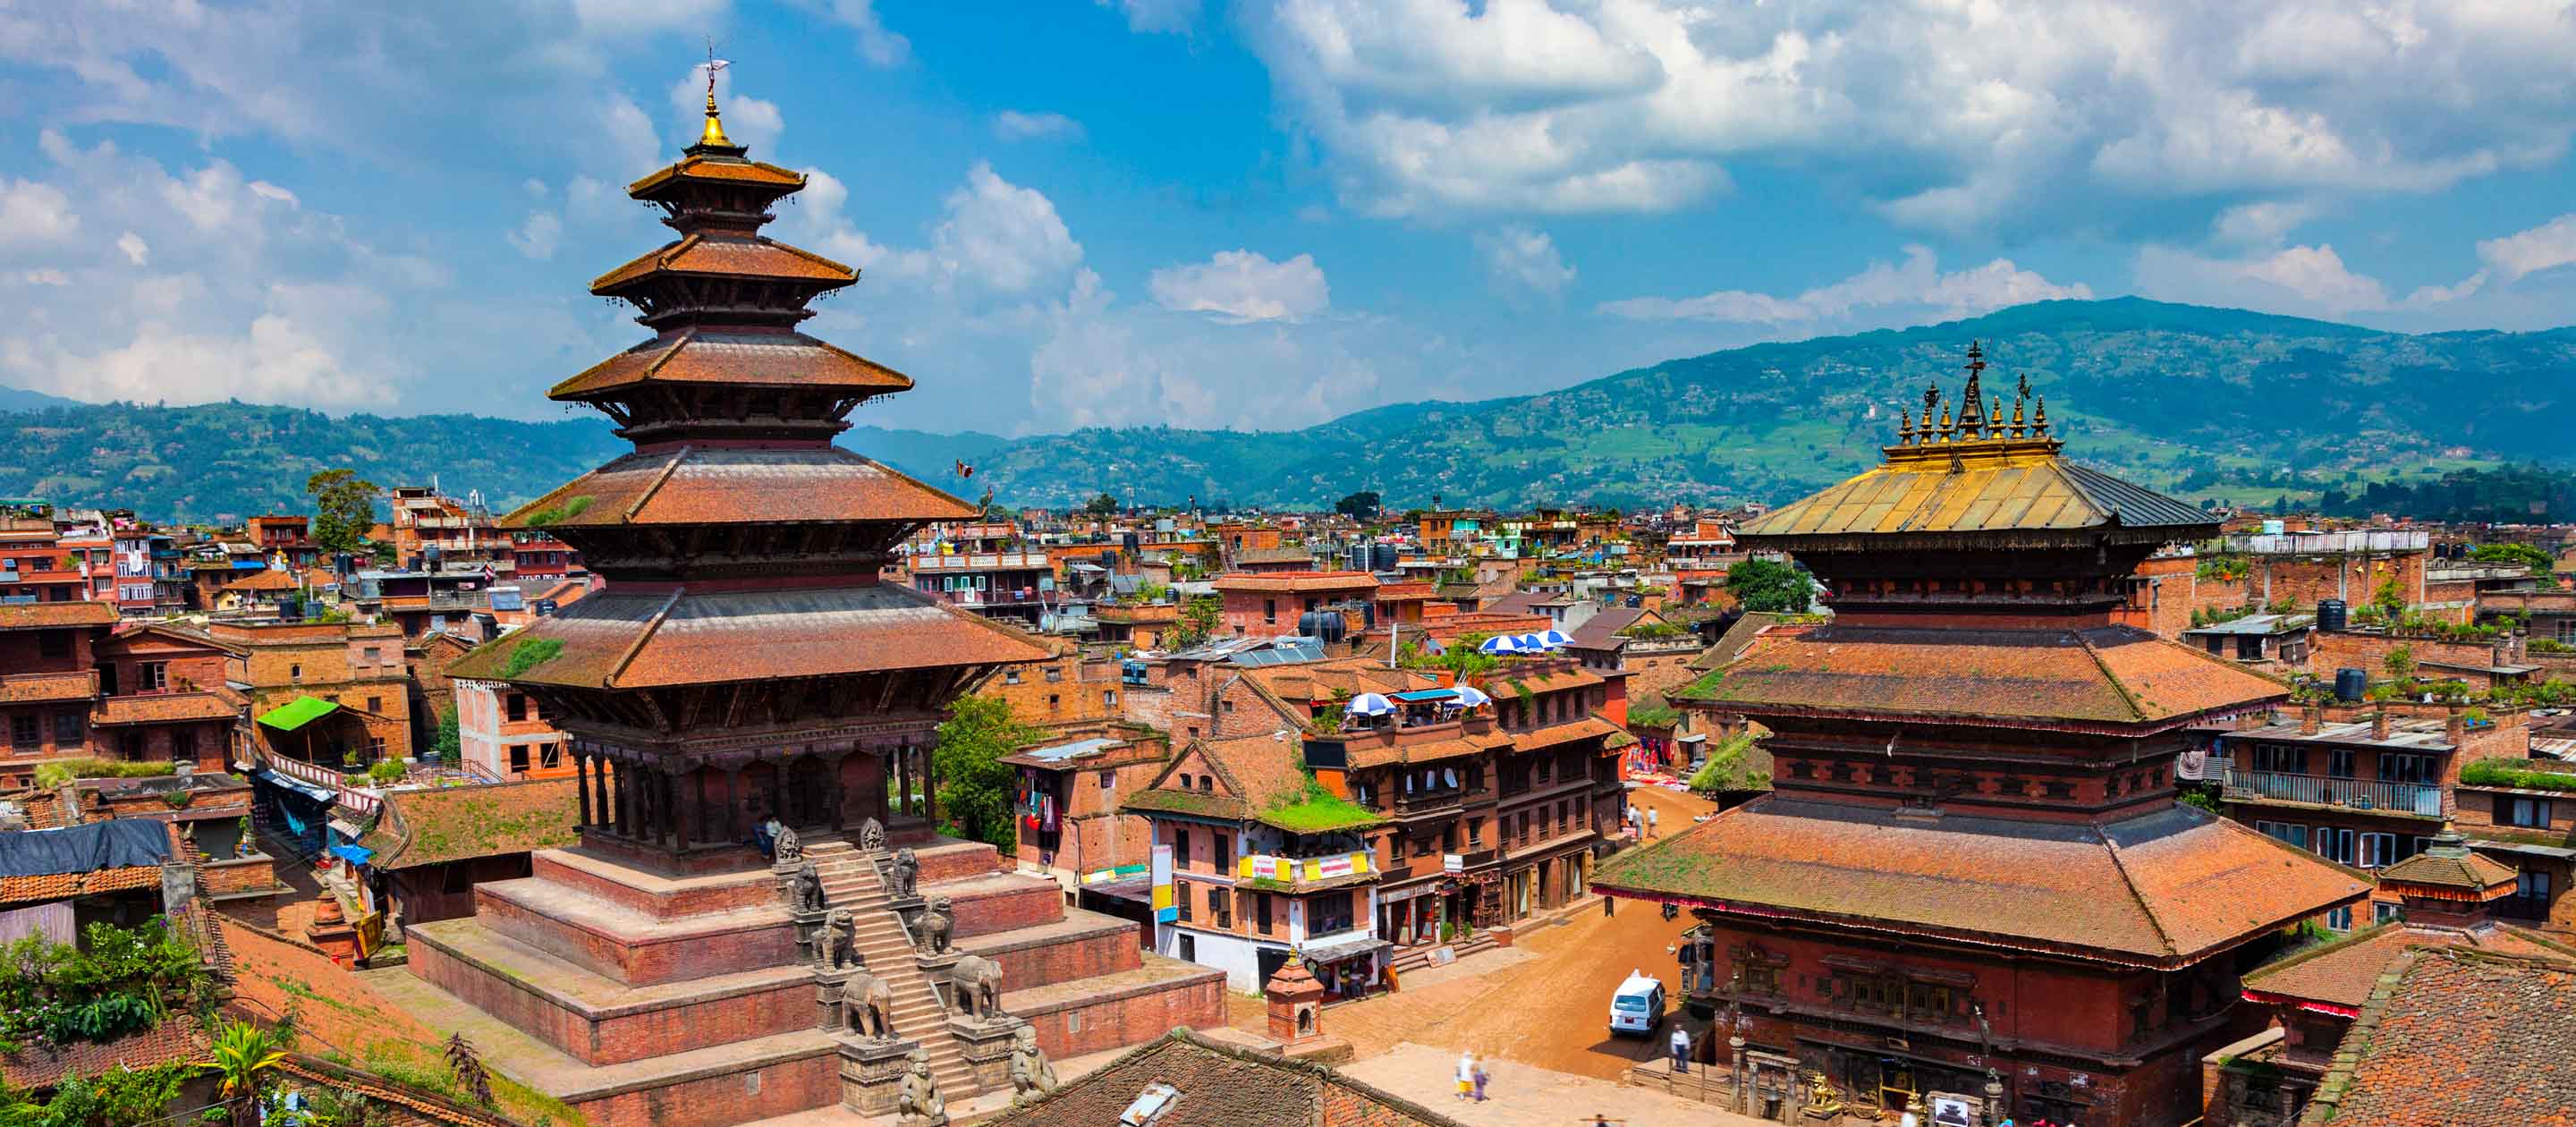 Nepal adventureTour Packages - Book honeymoon ,family,adventure tour packages to Nepal adventure|Travel Knits